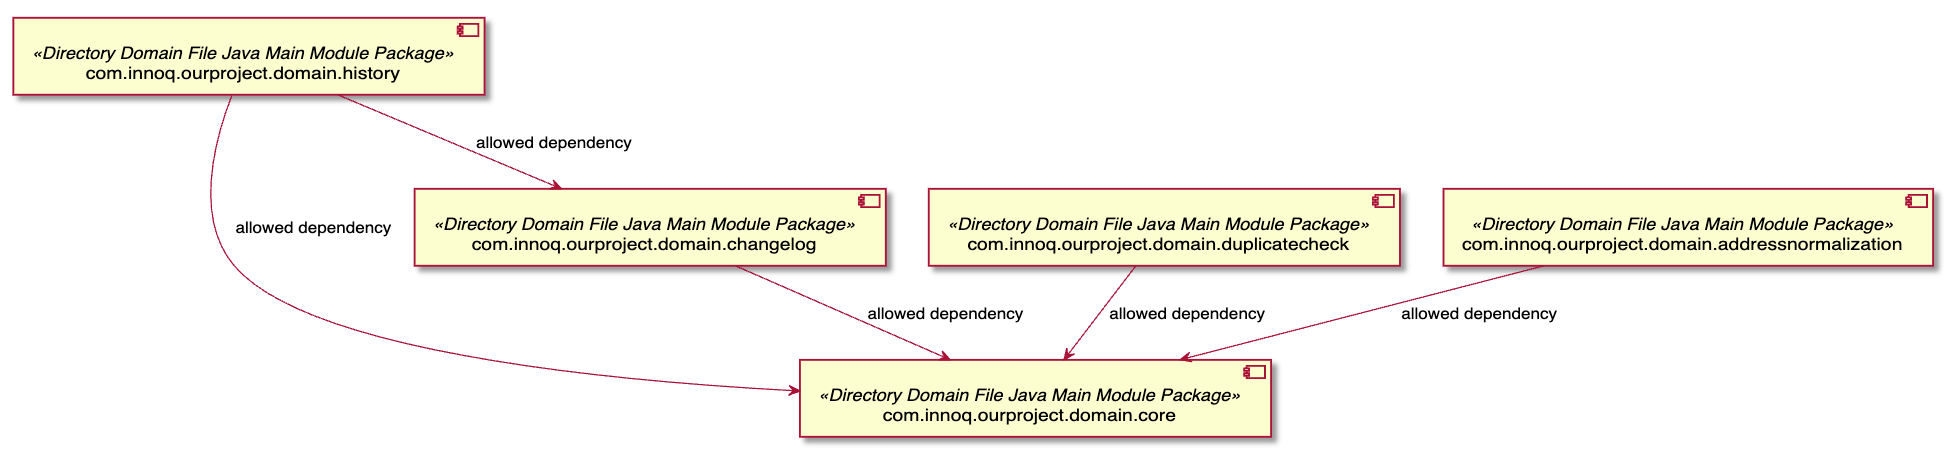 Allowed Domain Module Dependencies